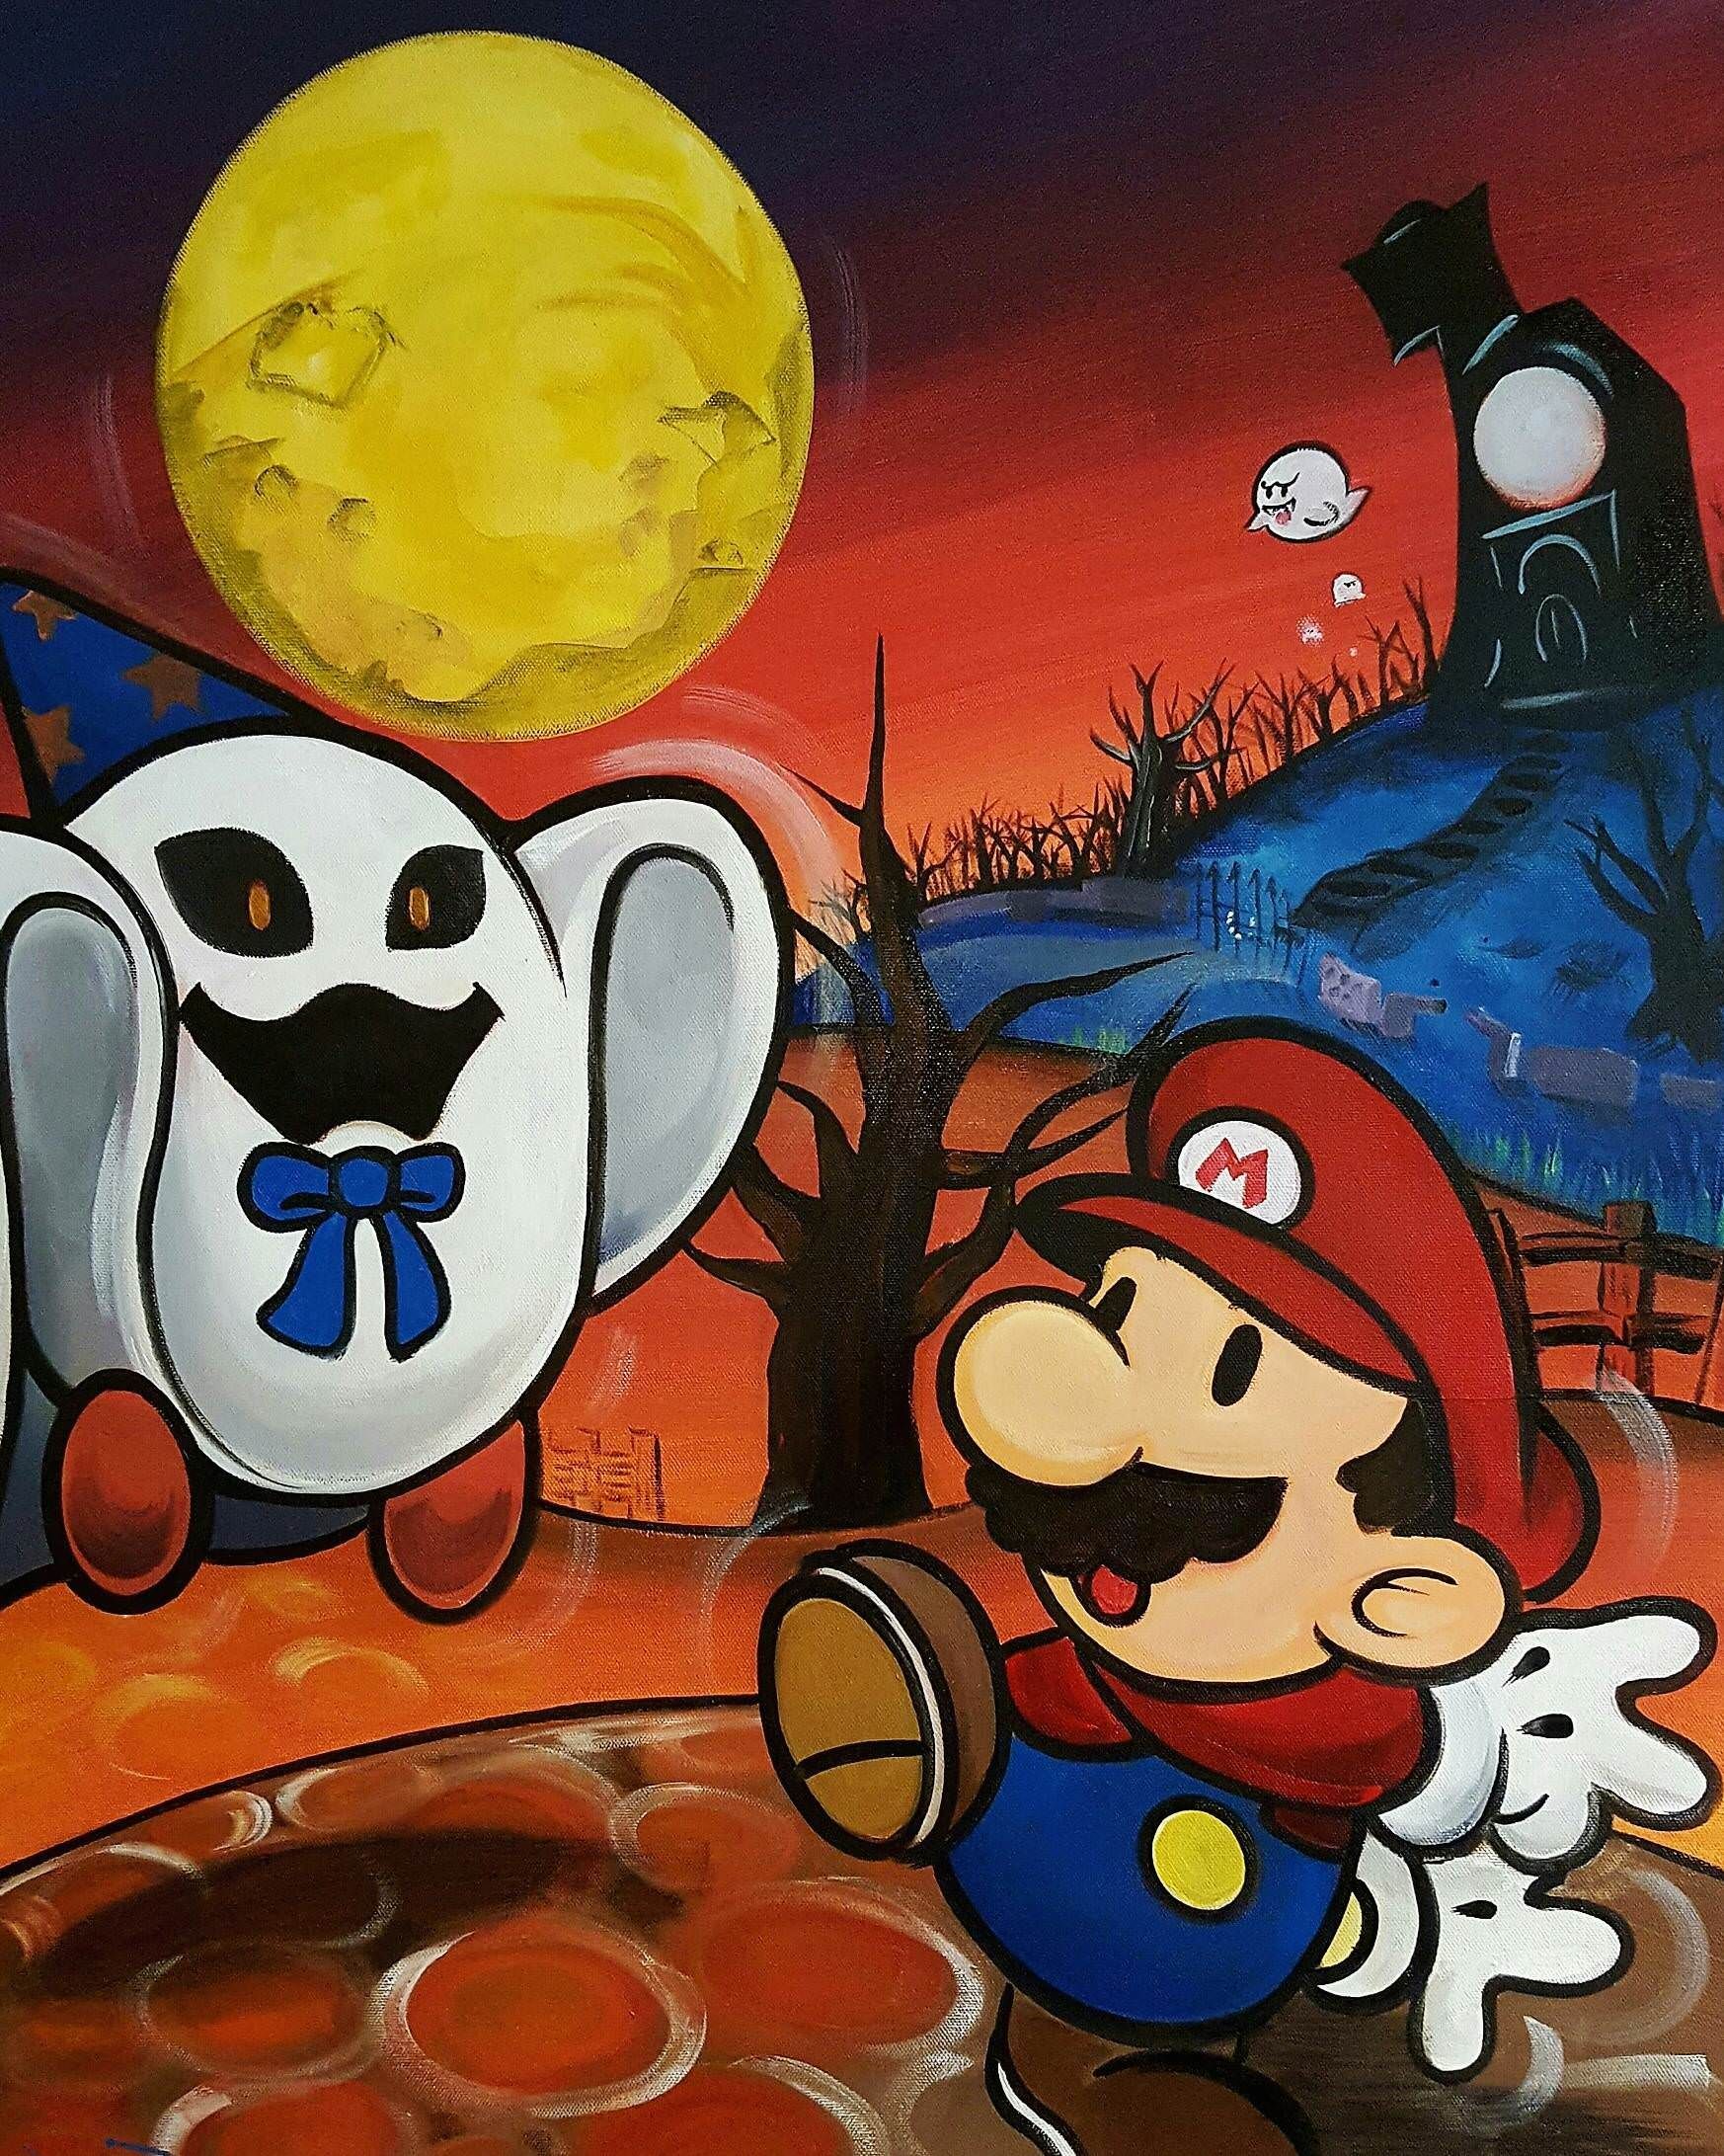 Paper Mario fan art painting I did last year for Halloween. Paper mario, Mario fan art, Mario and luigi